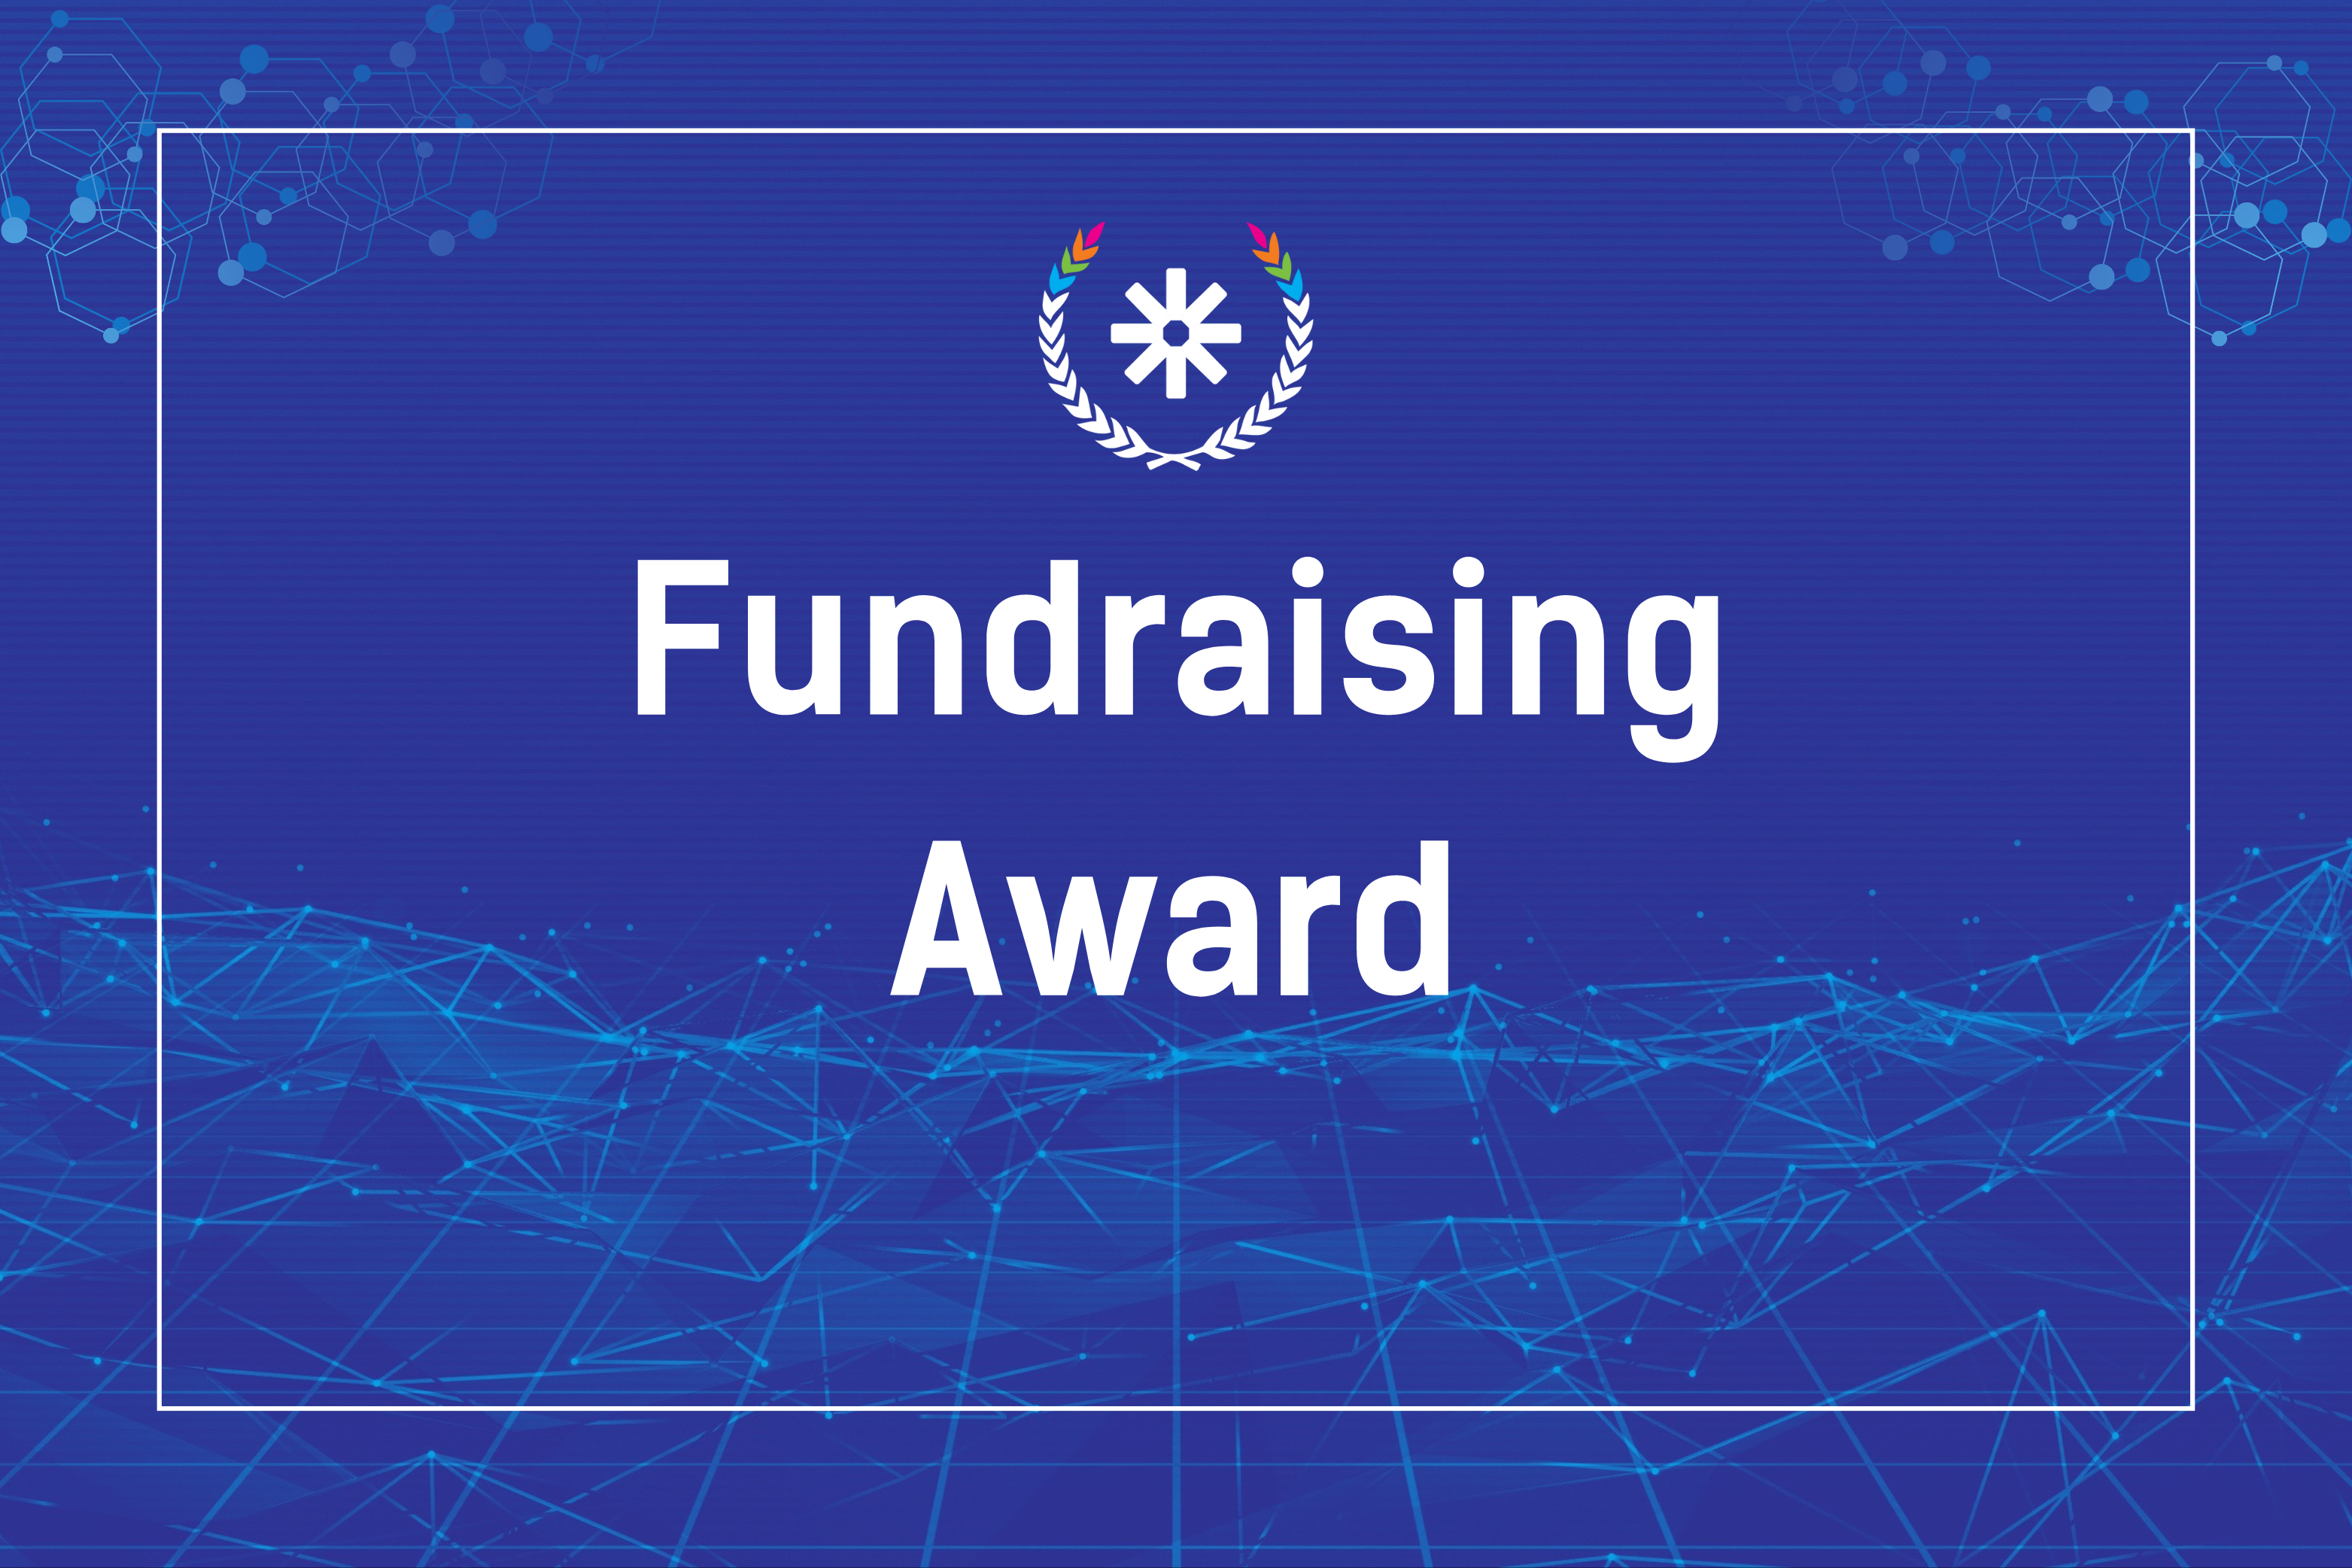 Fundraising Award